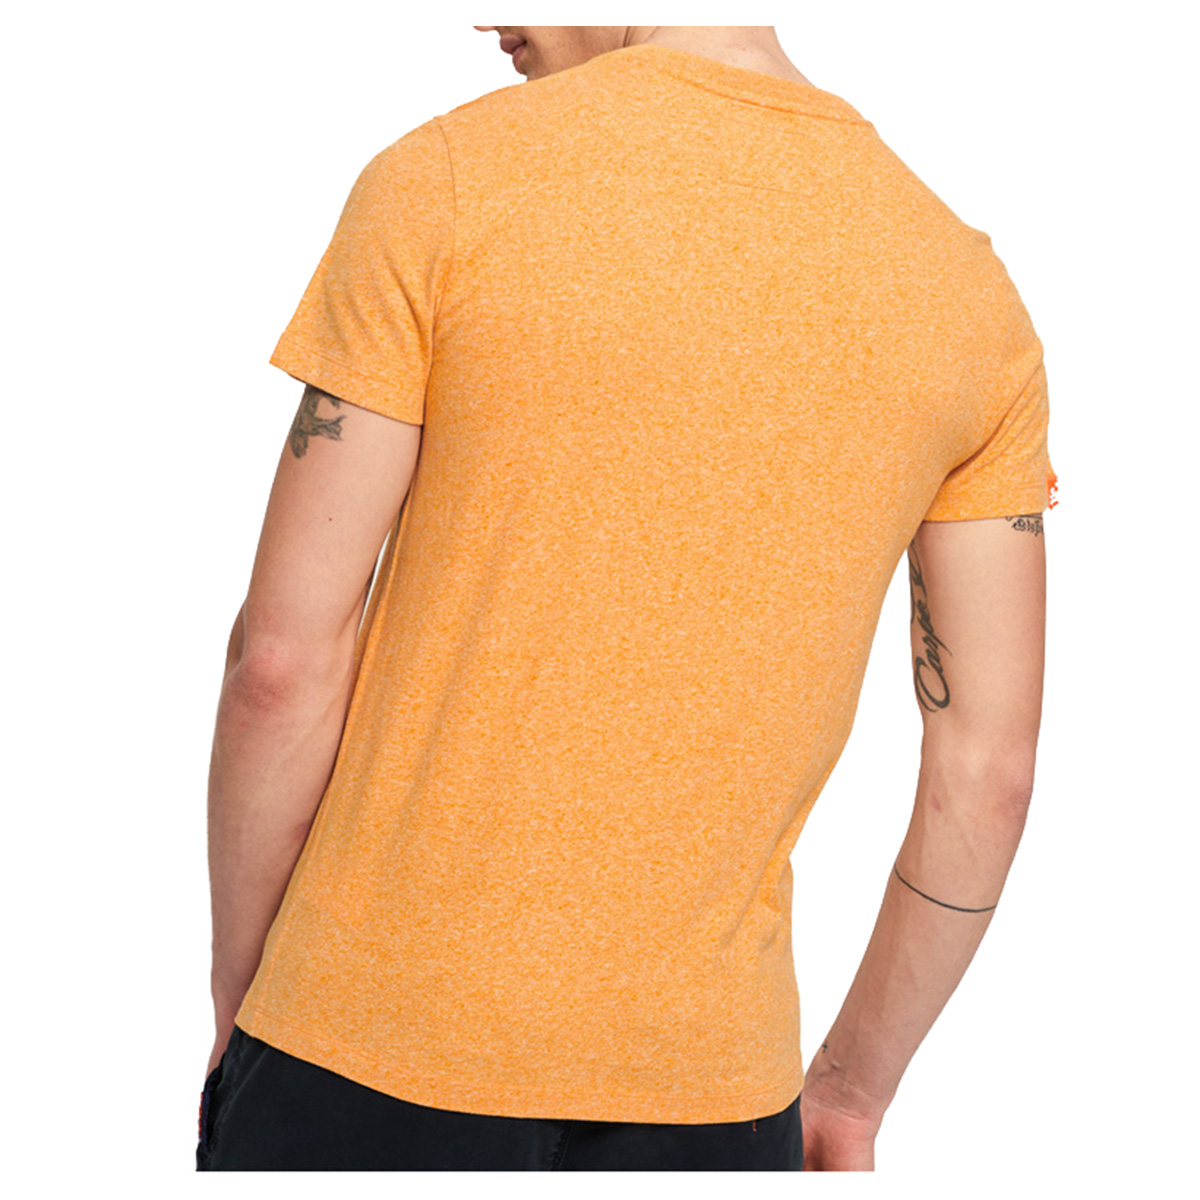 Superdry Herren Orange Label Vintage Embroidery S/S Tee T-Shirt M10001RT Gelb 